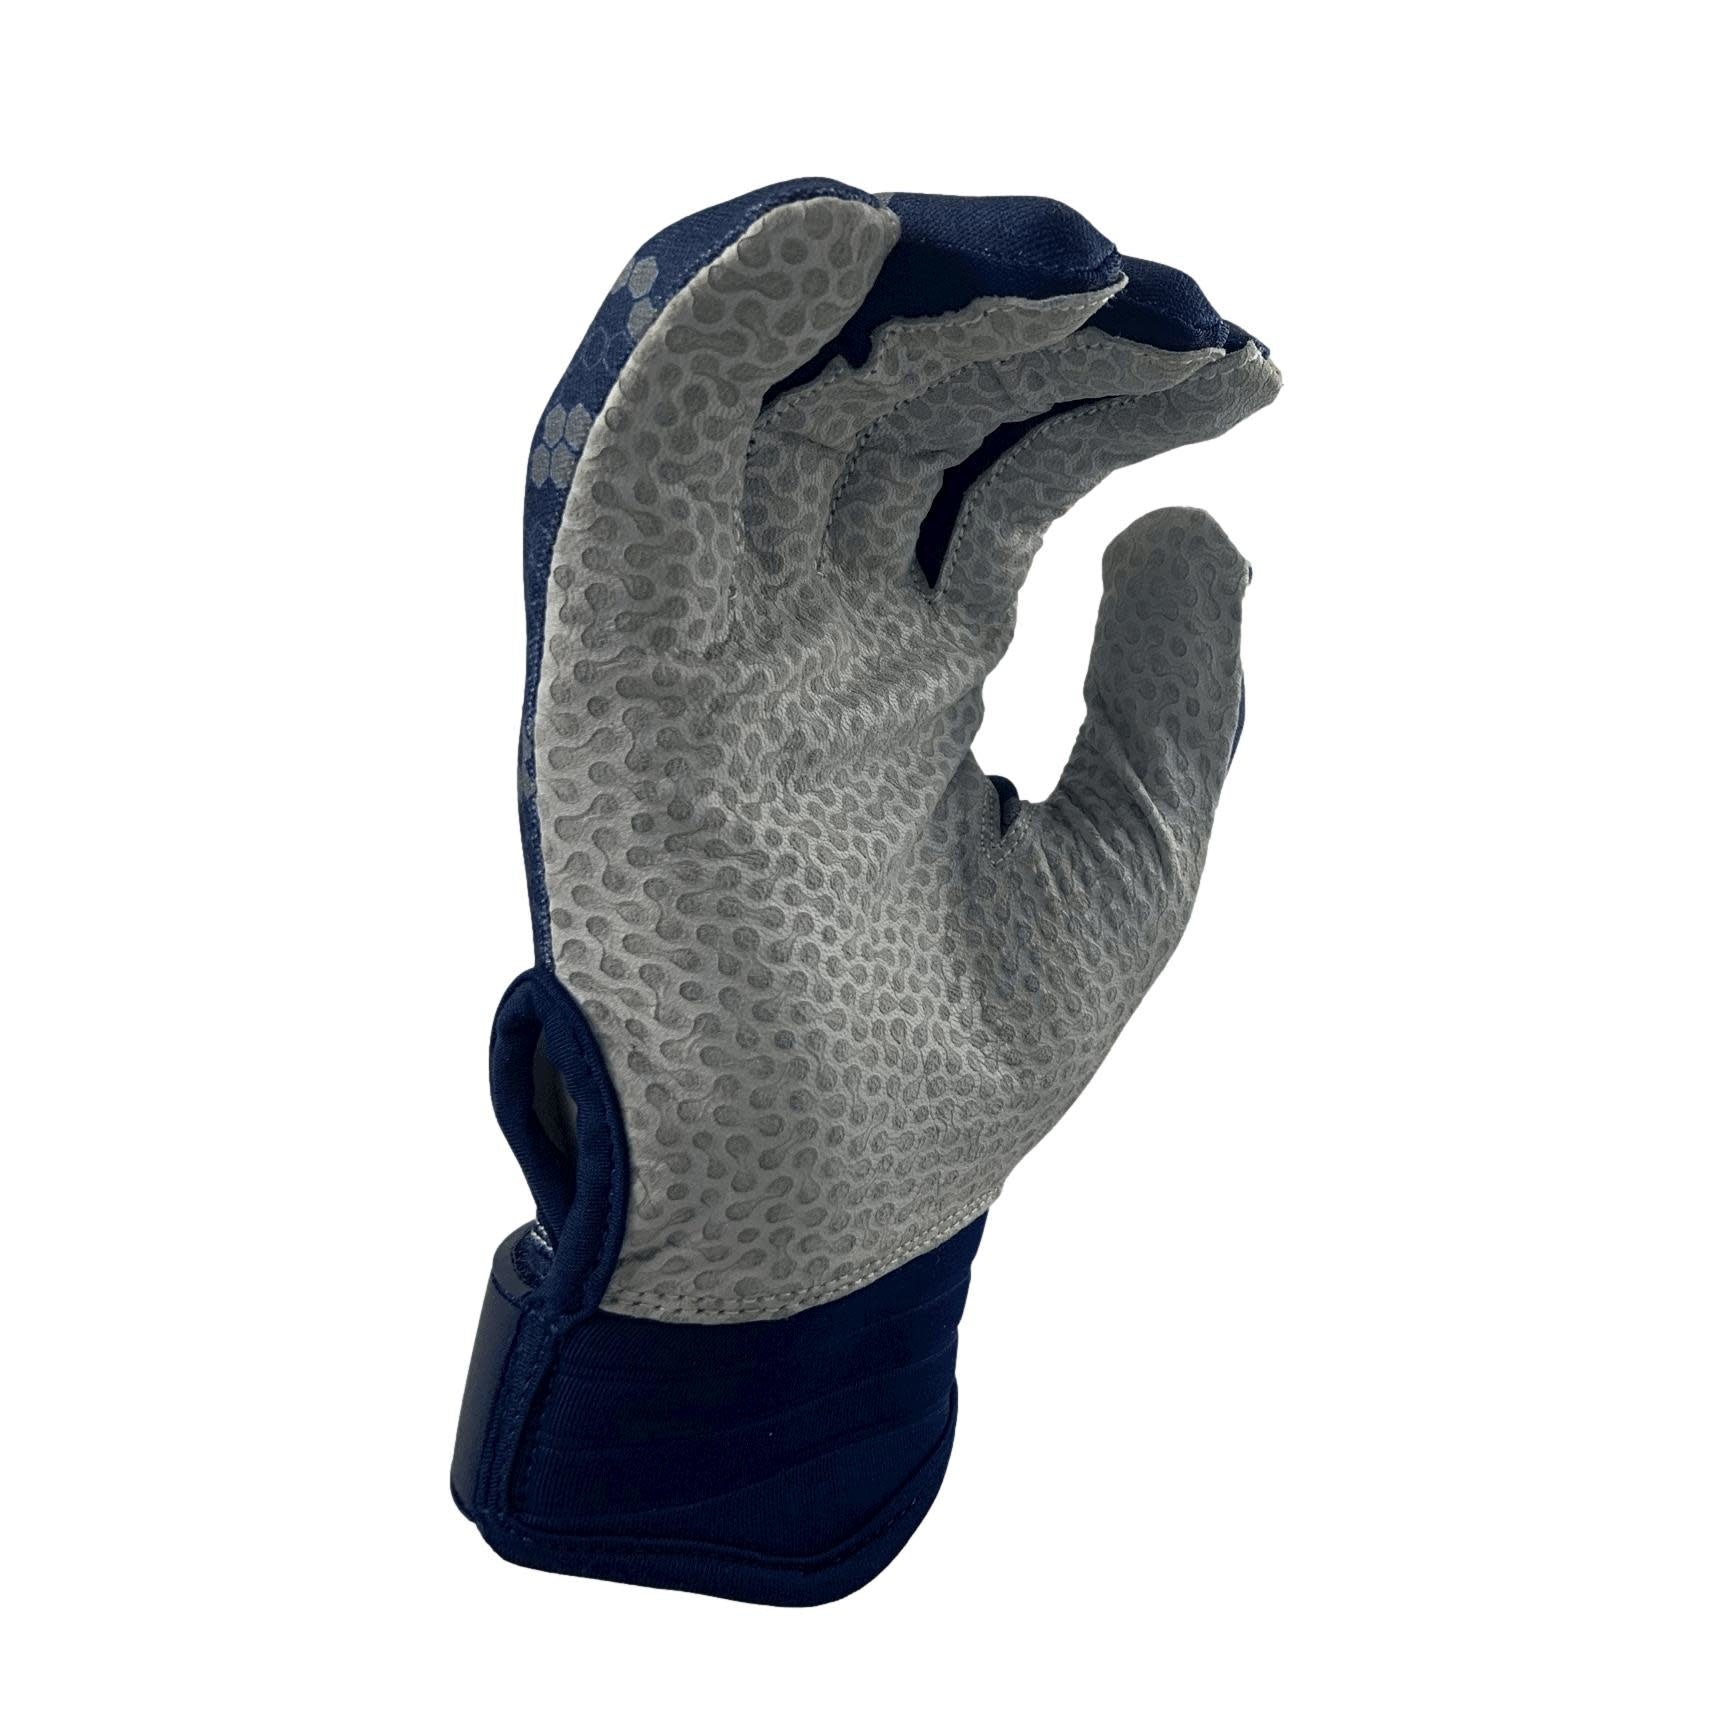 B45 Batting Gloves